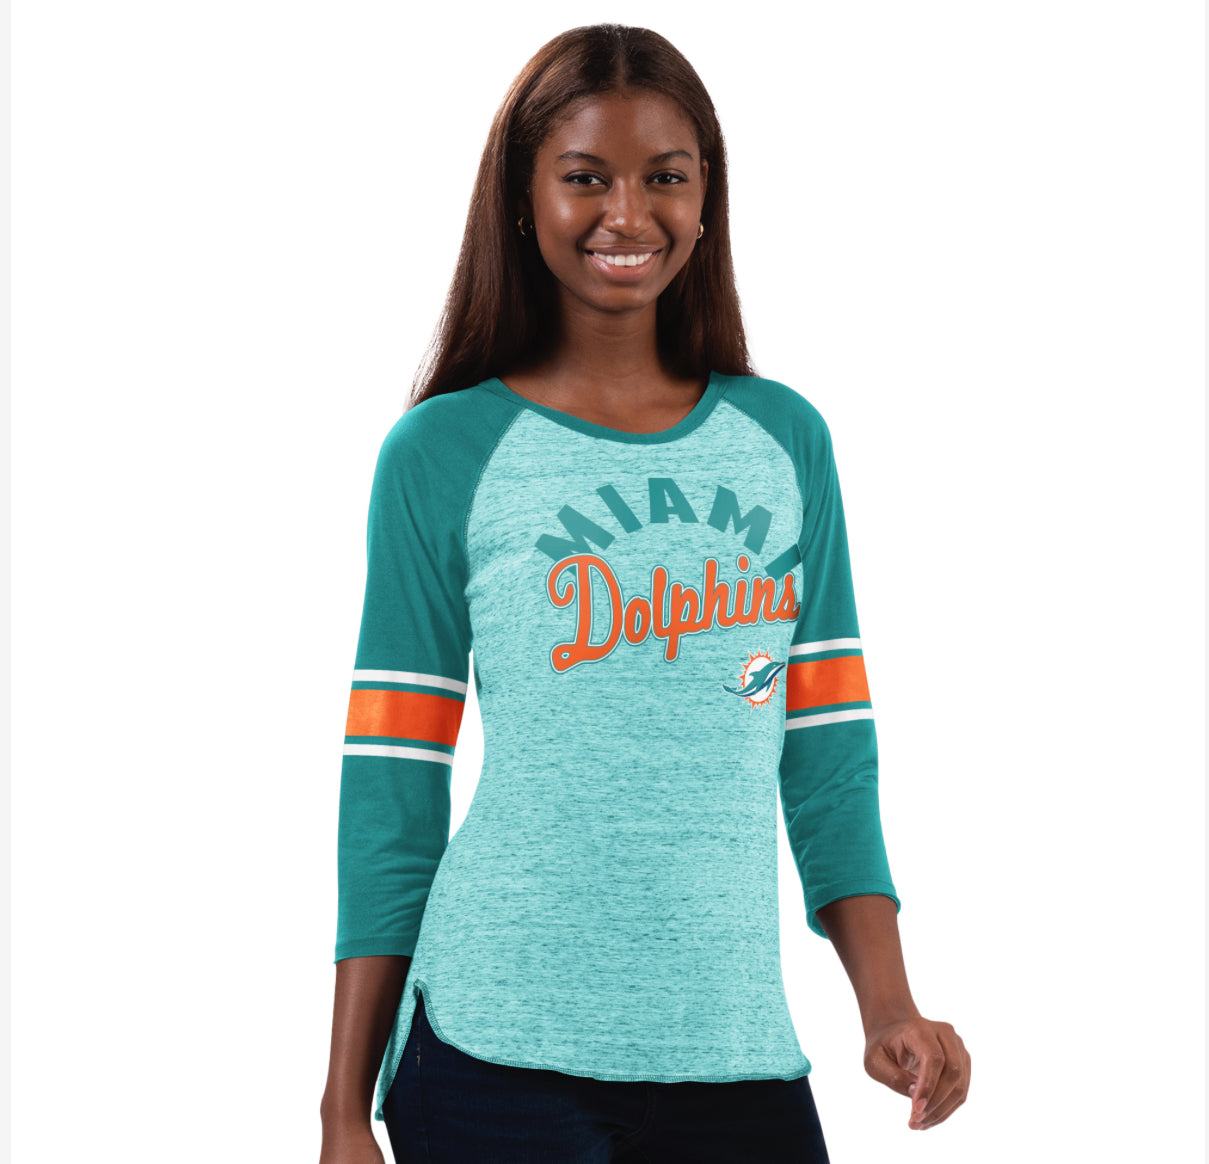 Miami Dolphins Glll Women's 3/4 Sleeve Heathered T-Shirt - Aqua